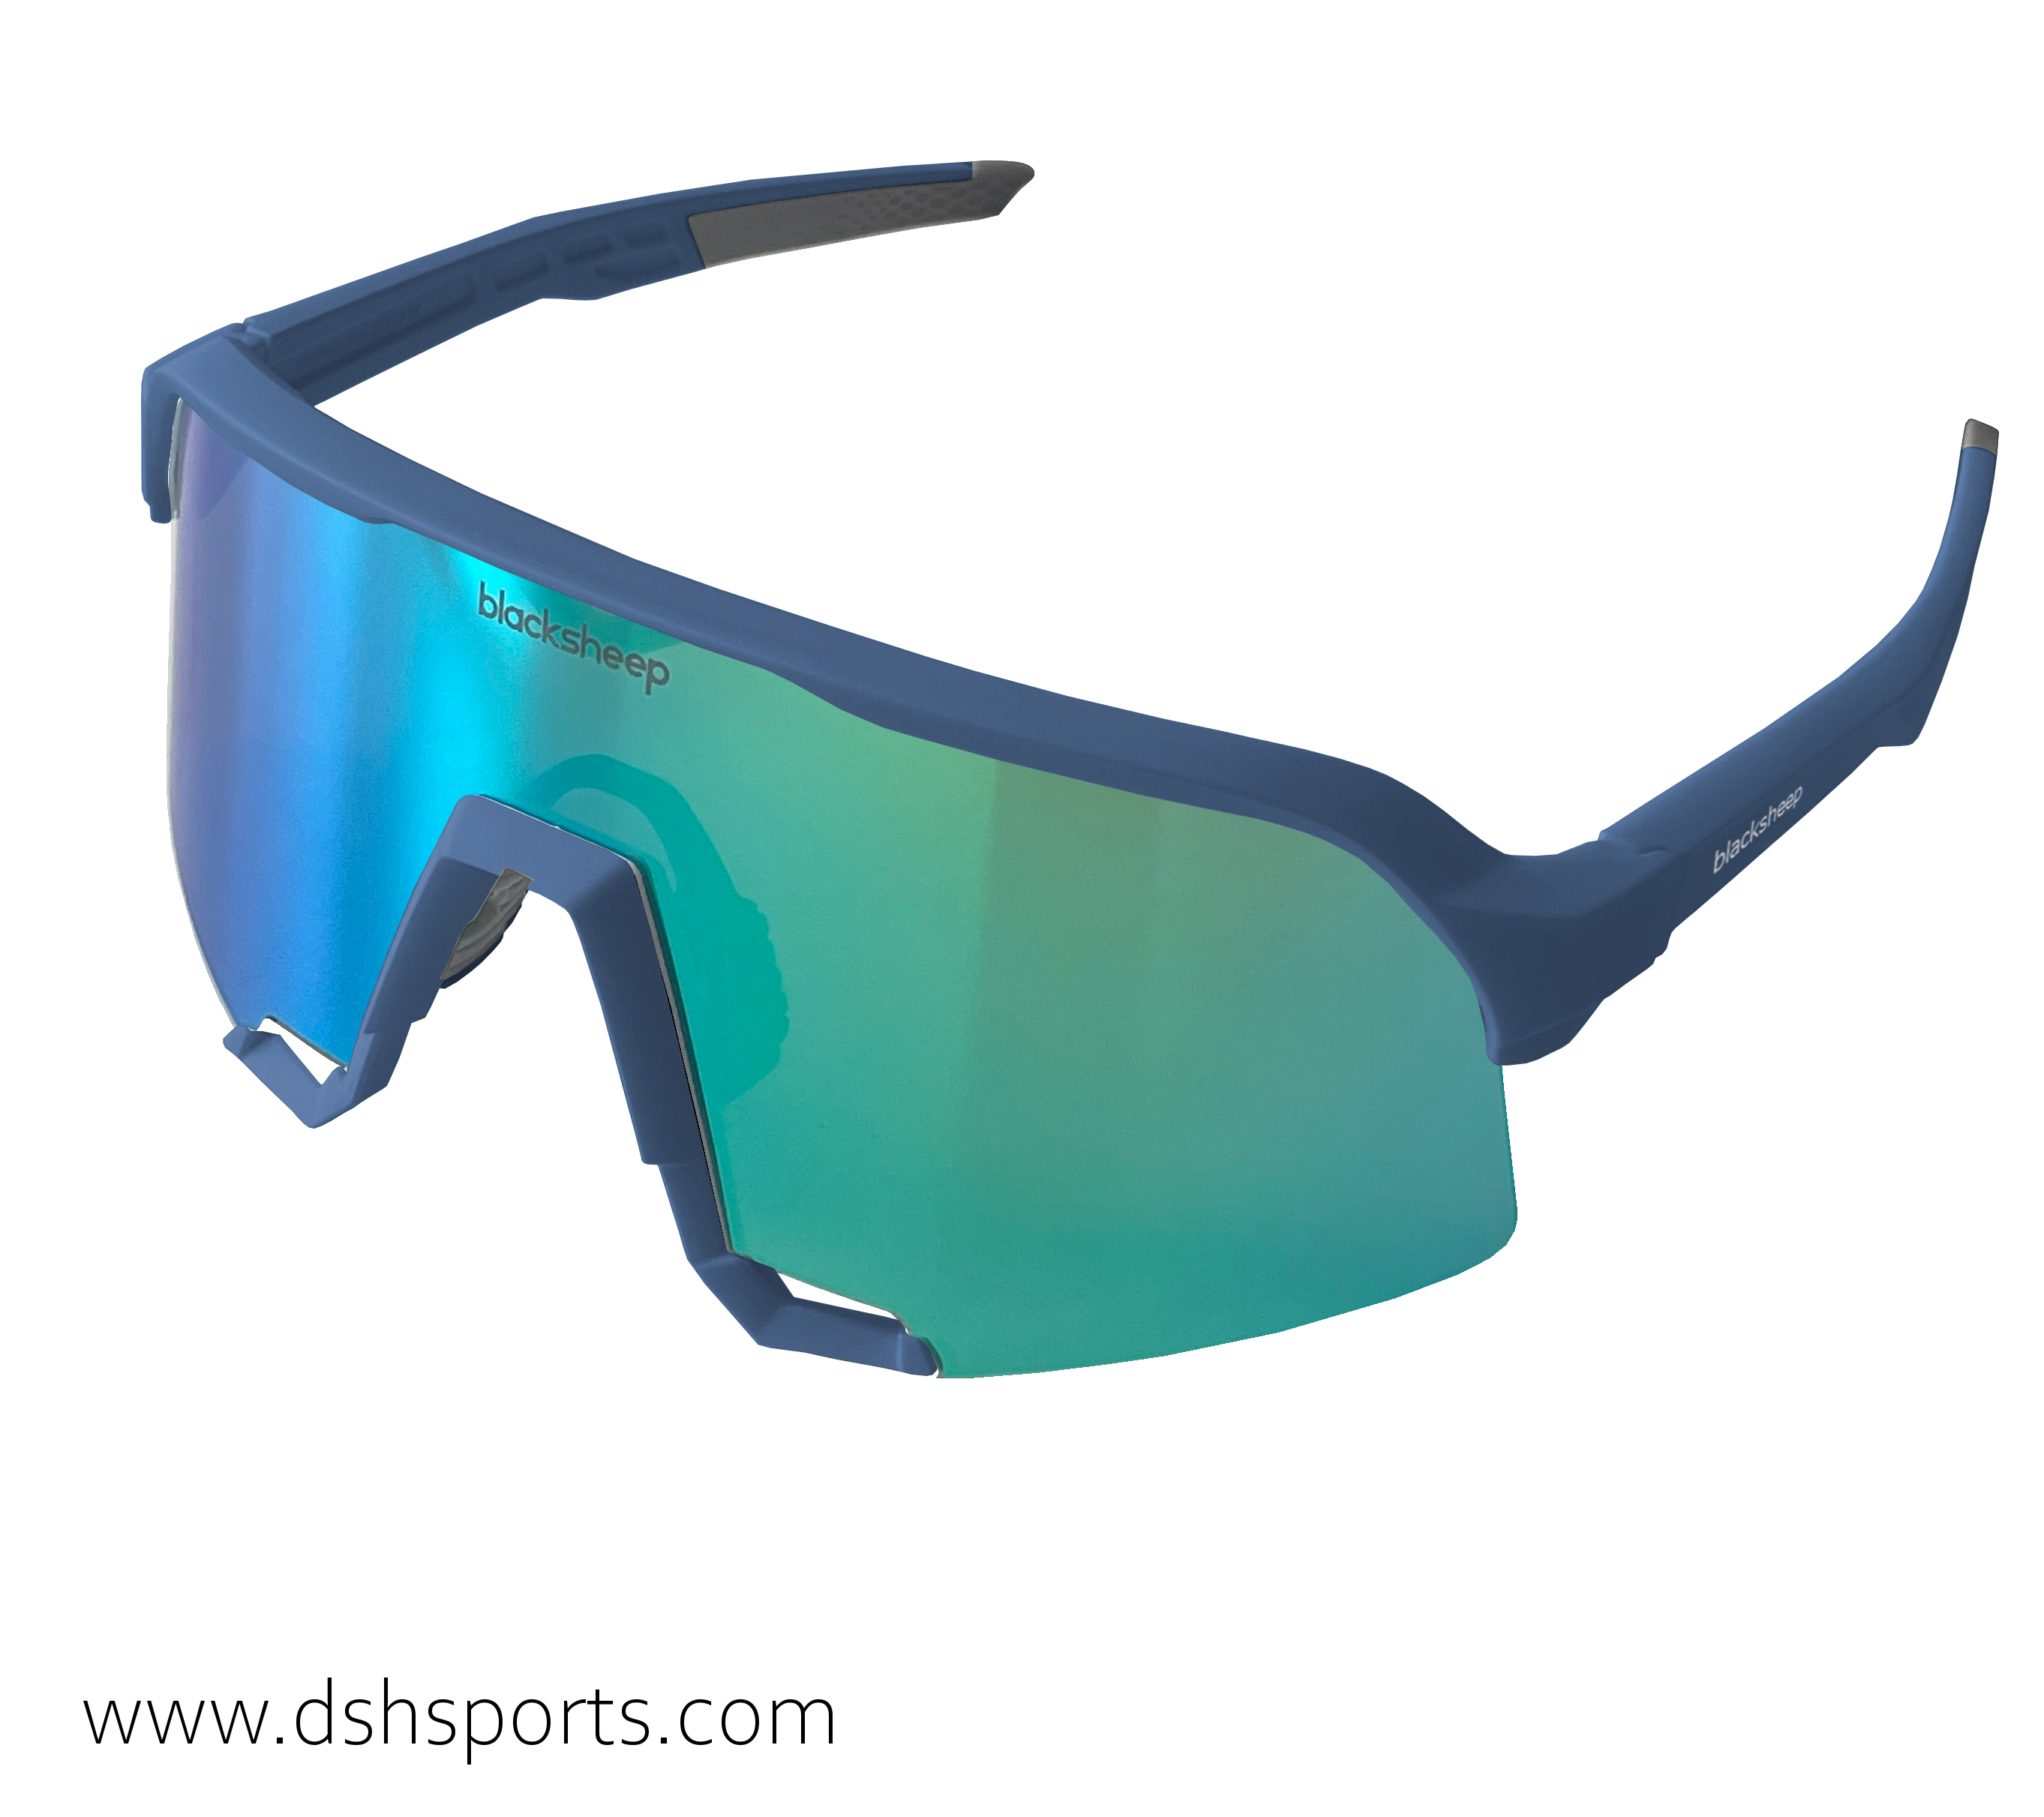 blacksheep Sportbrille "UTOPIA" - jetzt selbst konfigurieren